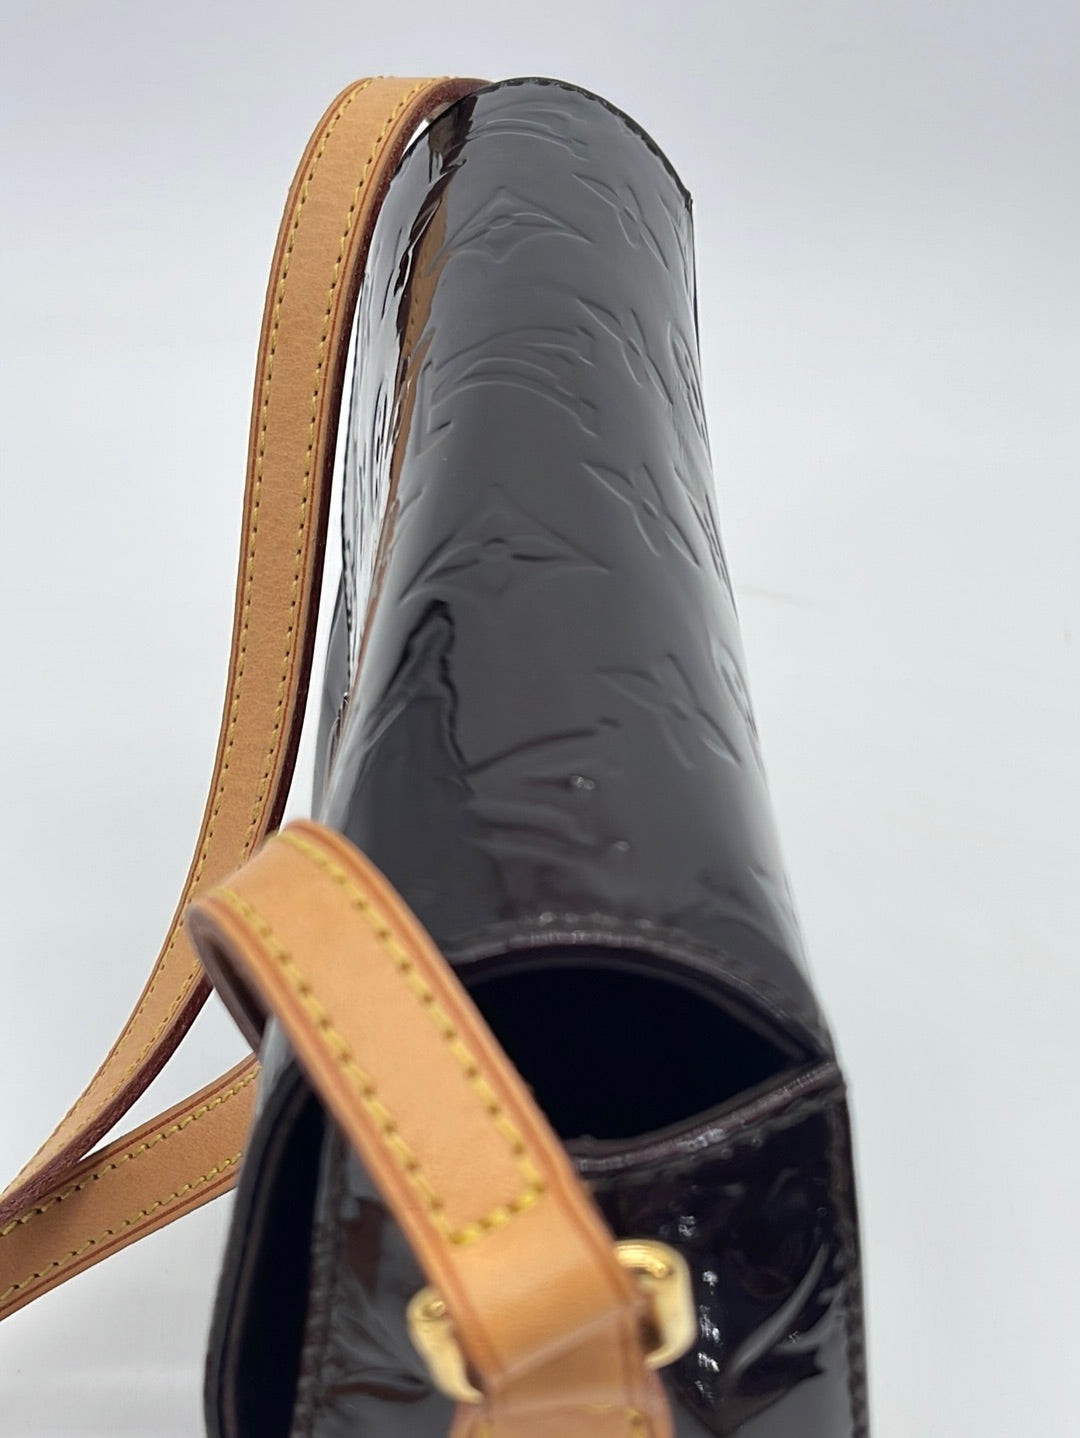 Louis Vuitton Rossmore Bag